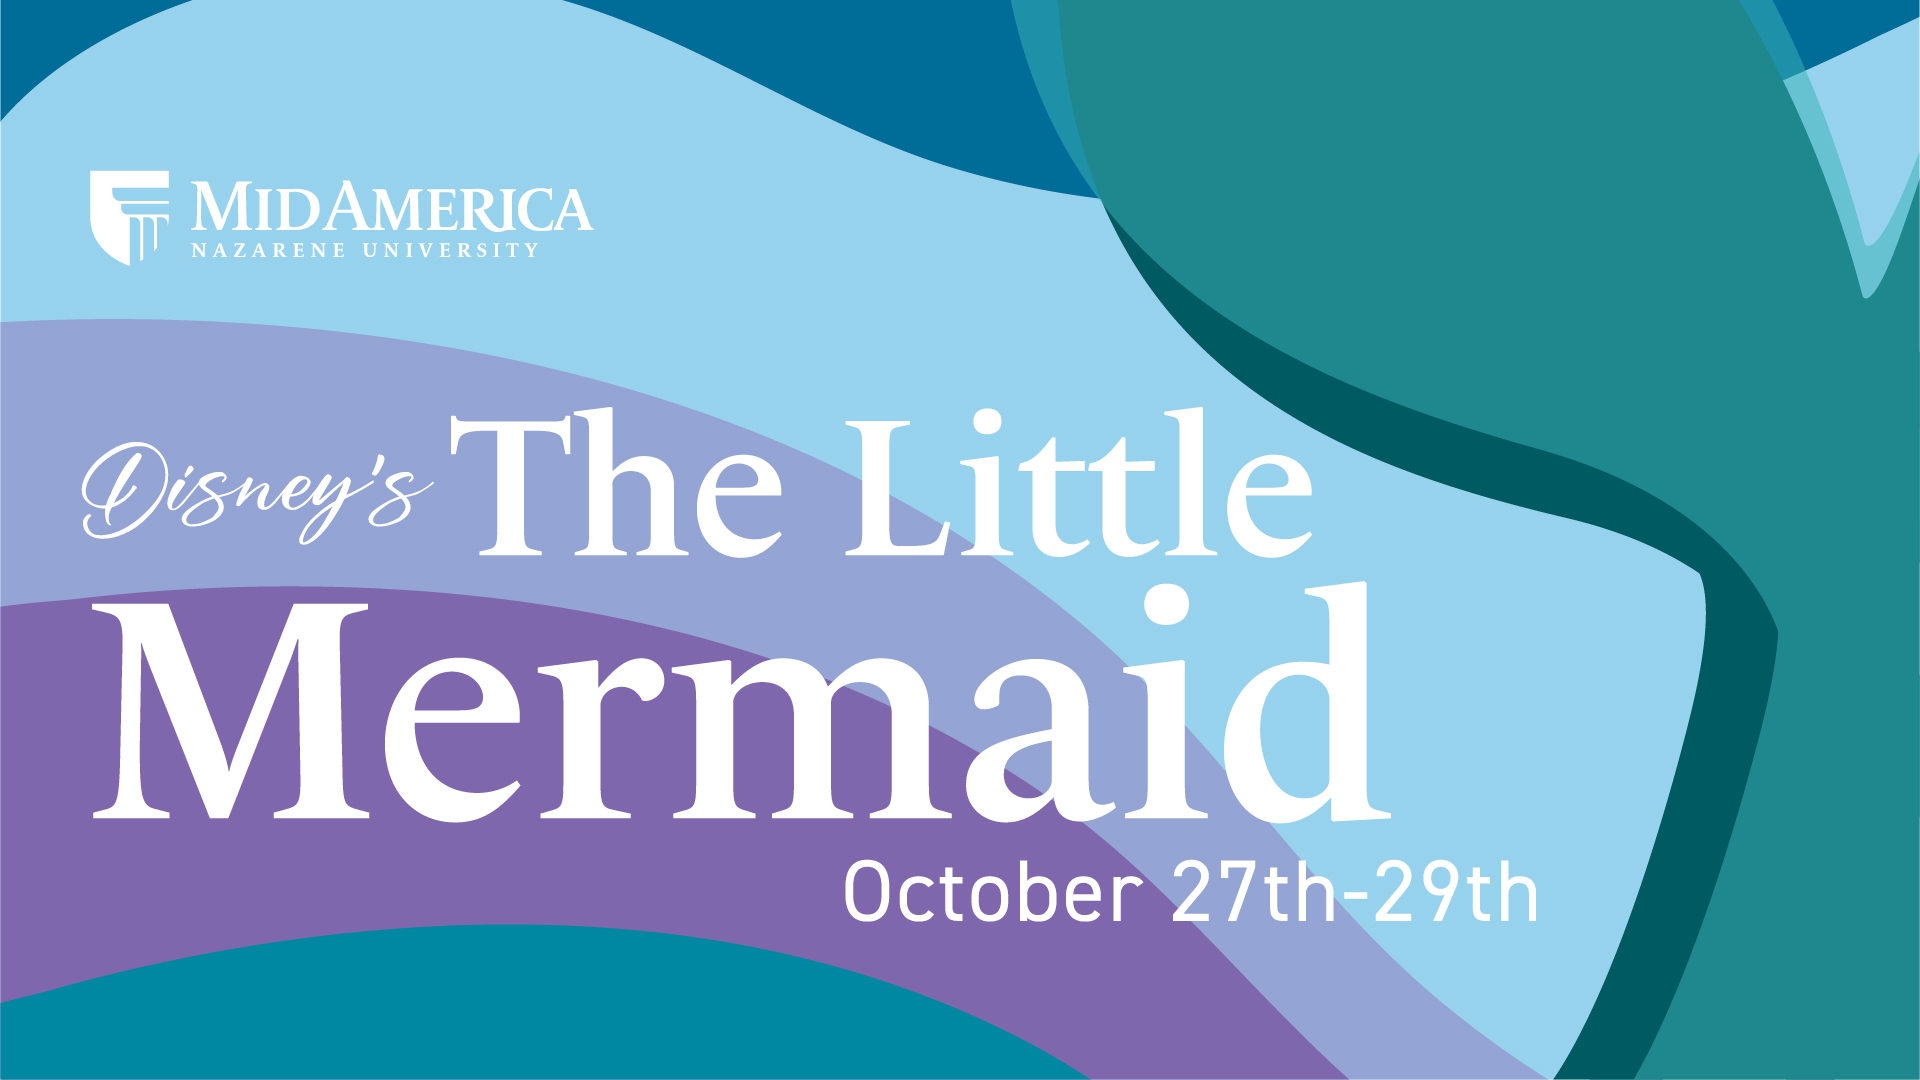 MNU Theatre: Disney’s The Little Mermaid